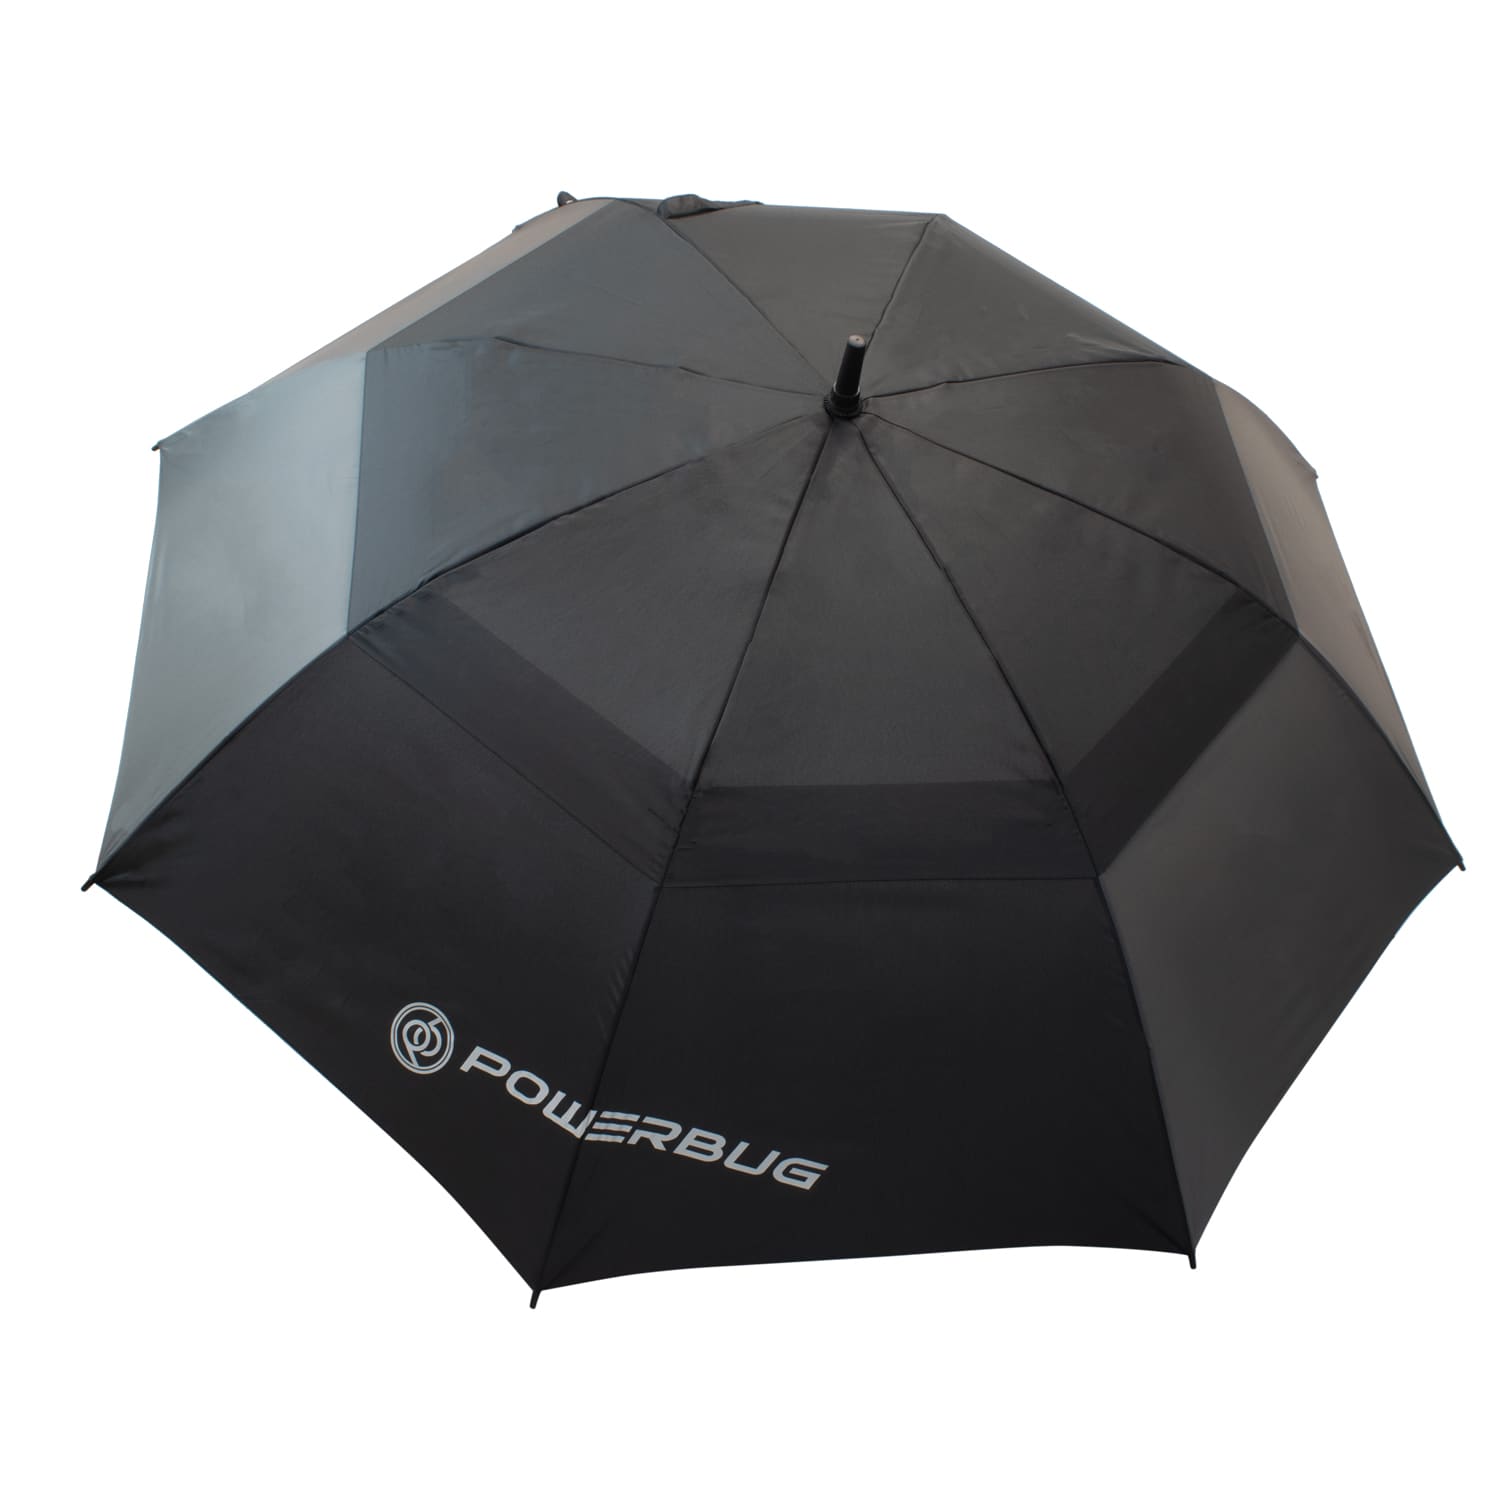 PowerBug large golf umbrella